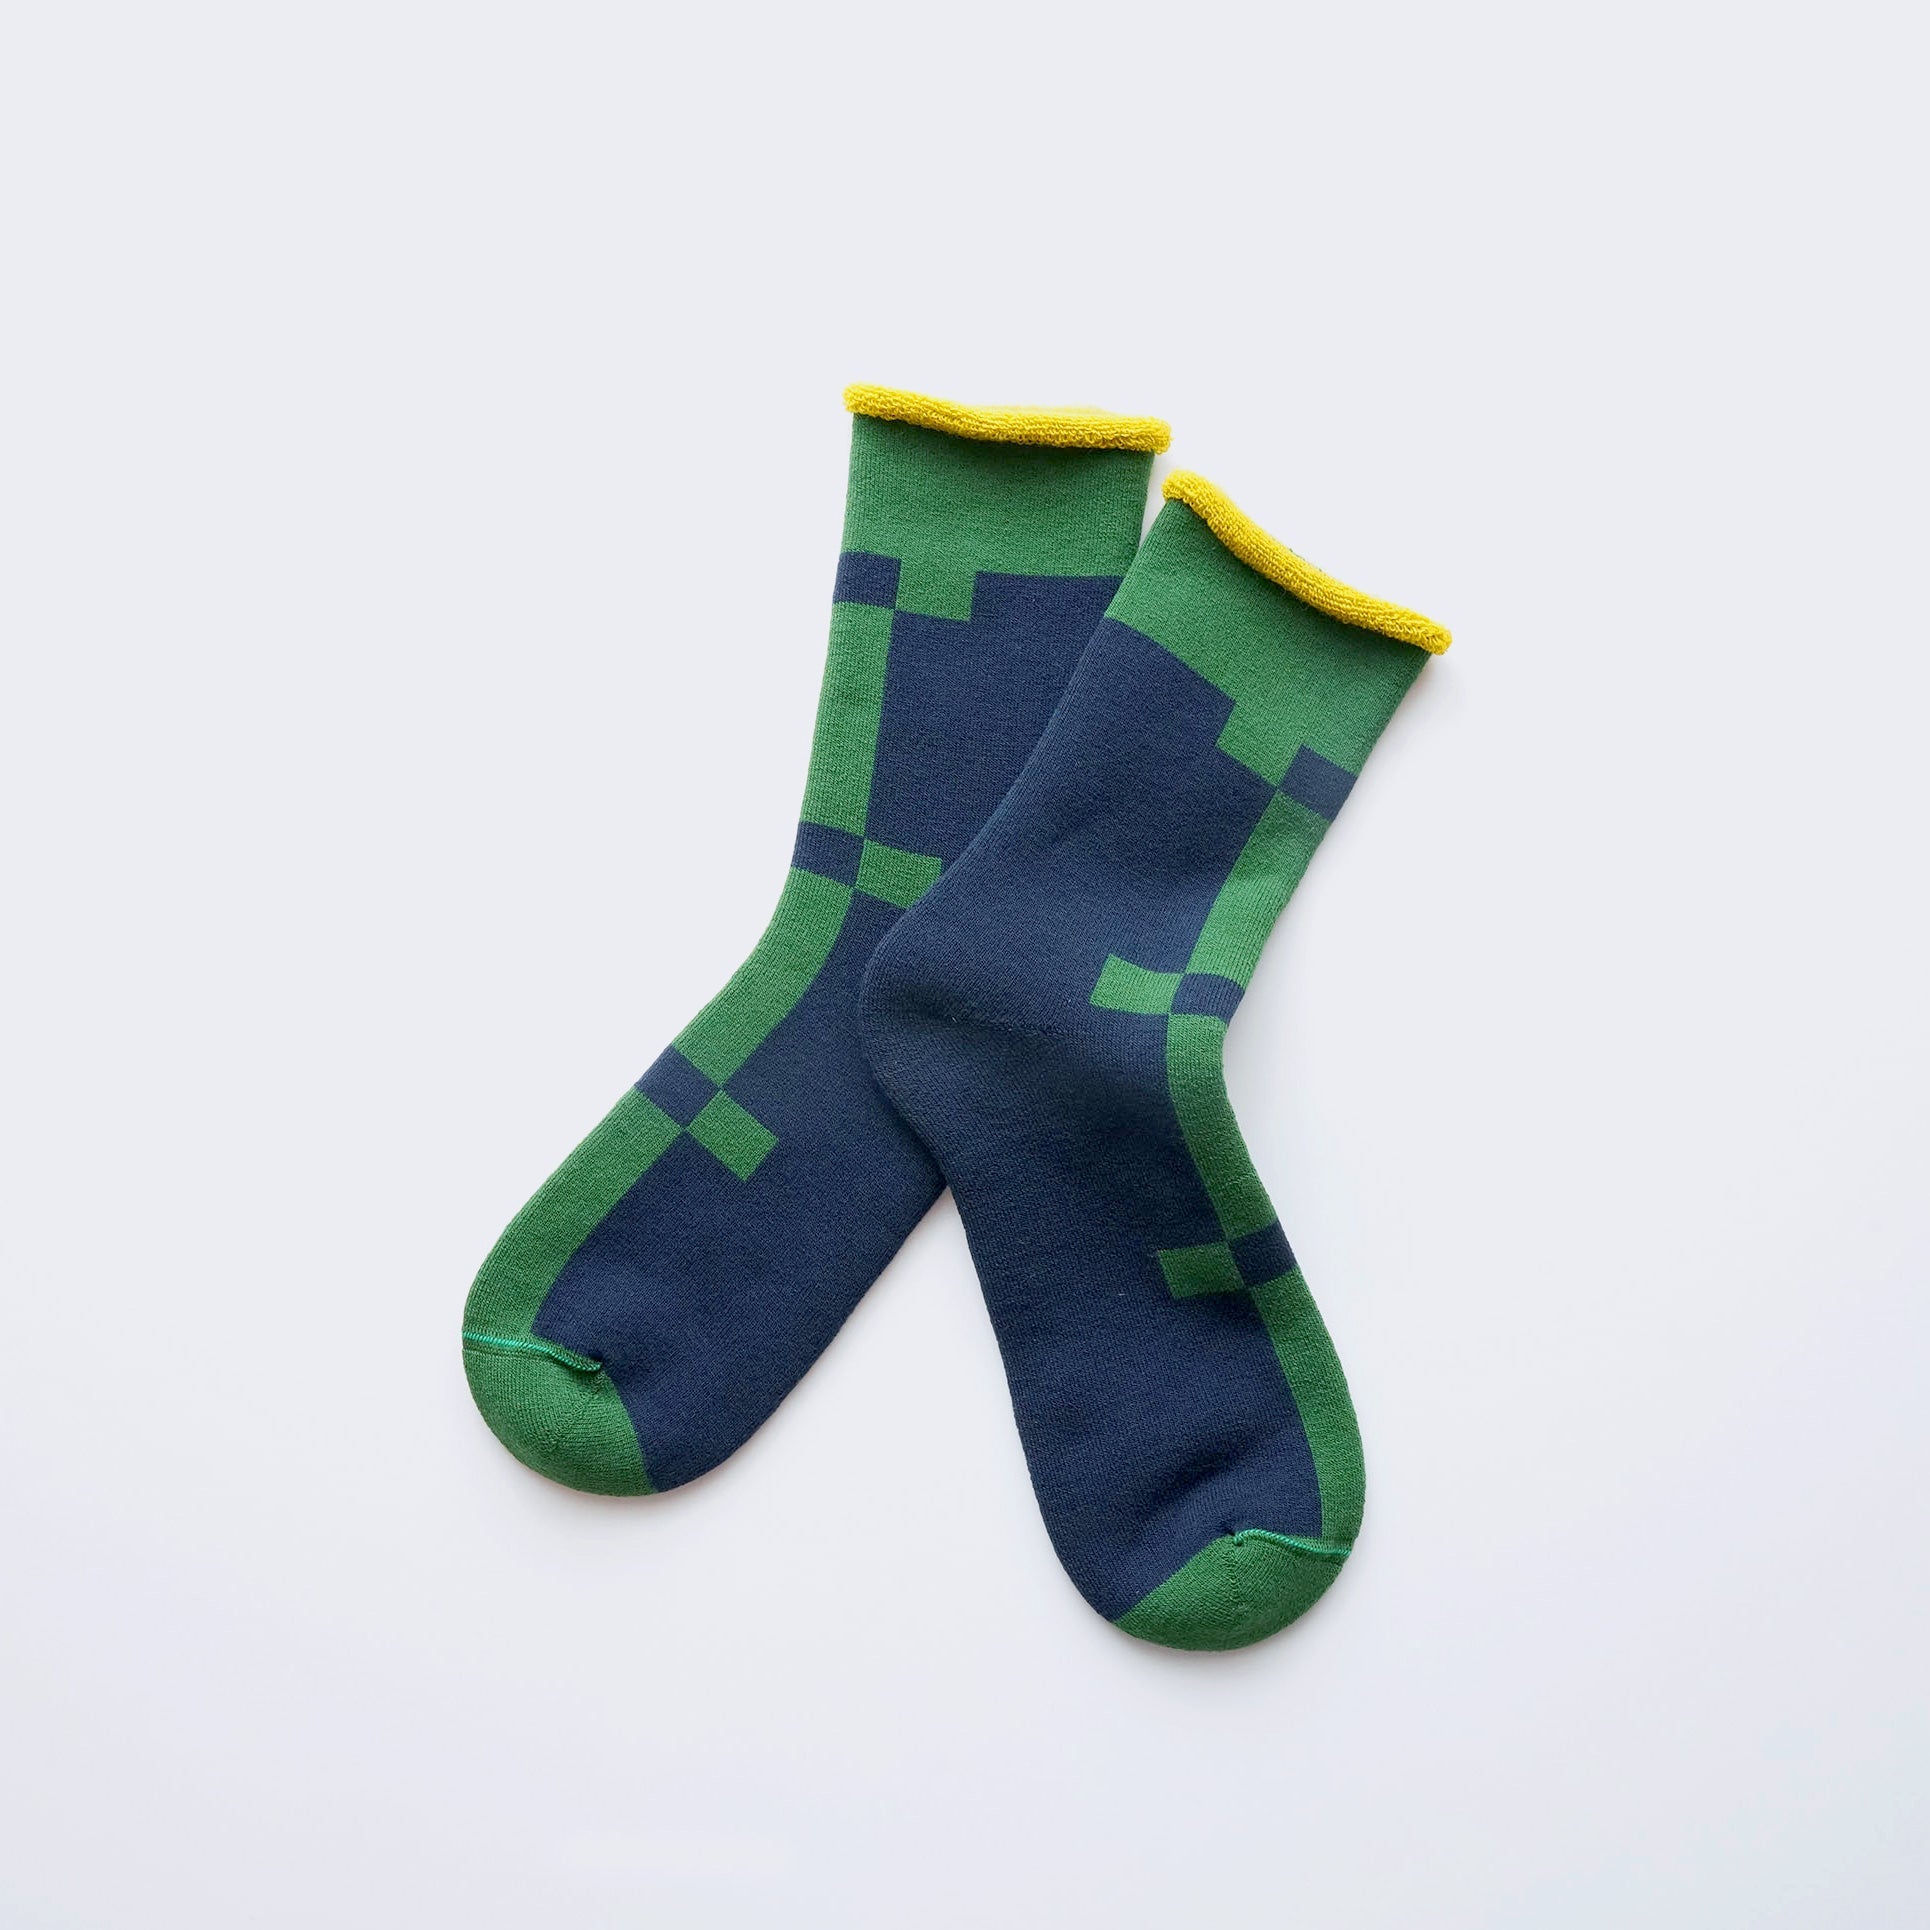 LATTICE-rich terry socks